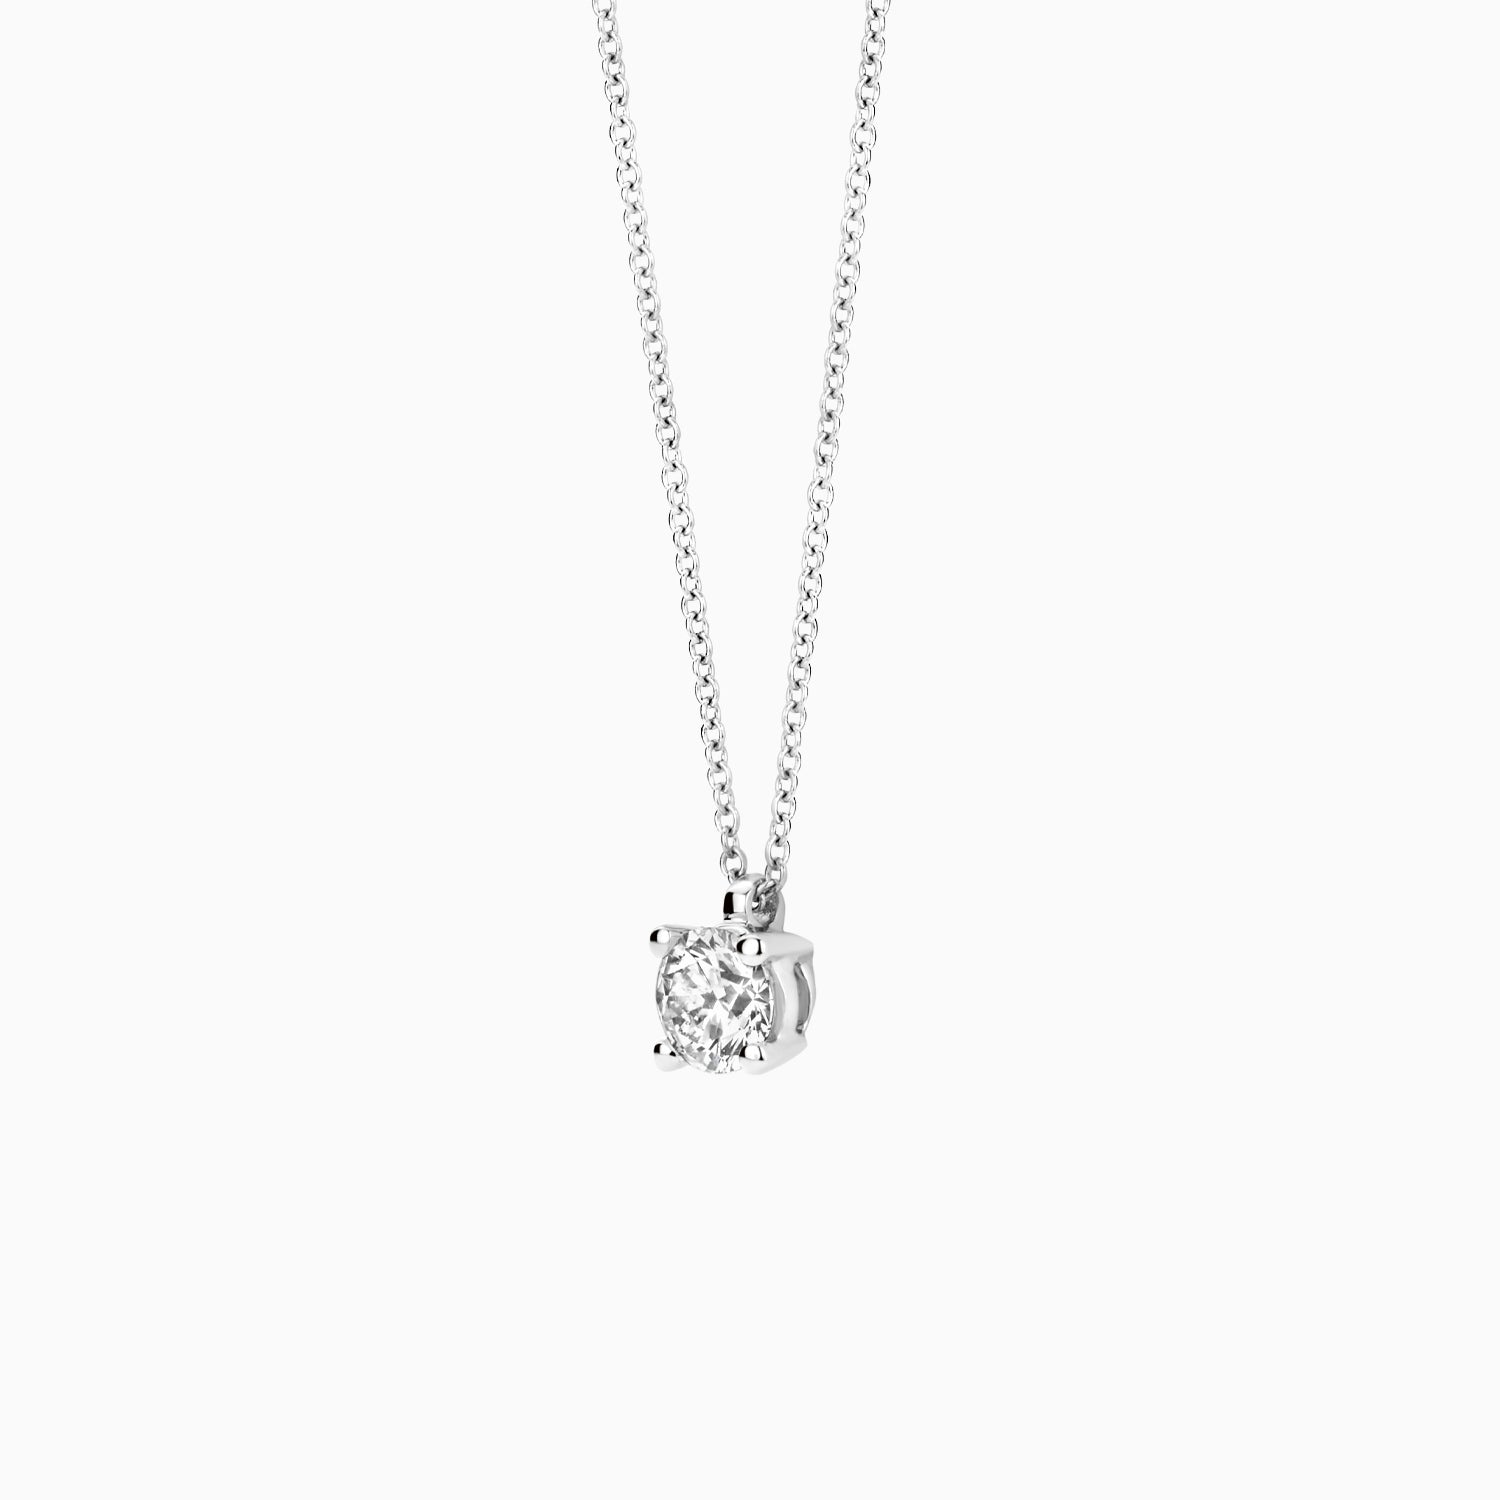 Lab diamonds necklace LG3002W - 14k White gold